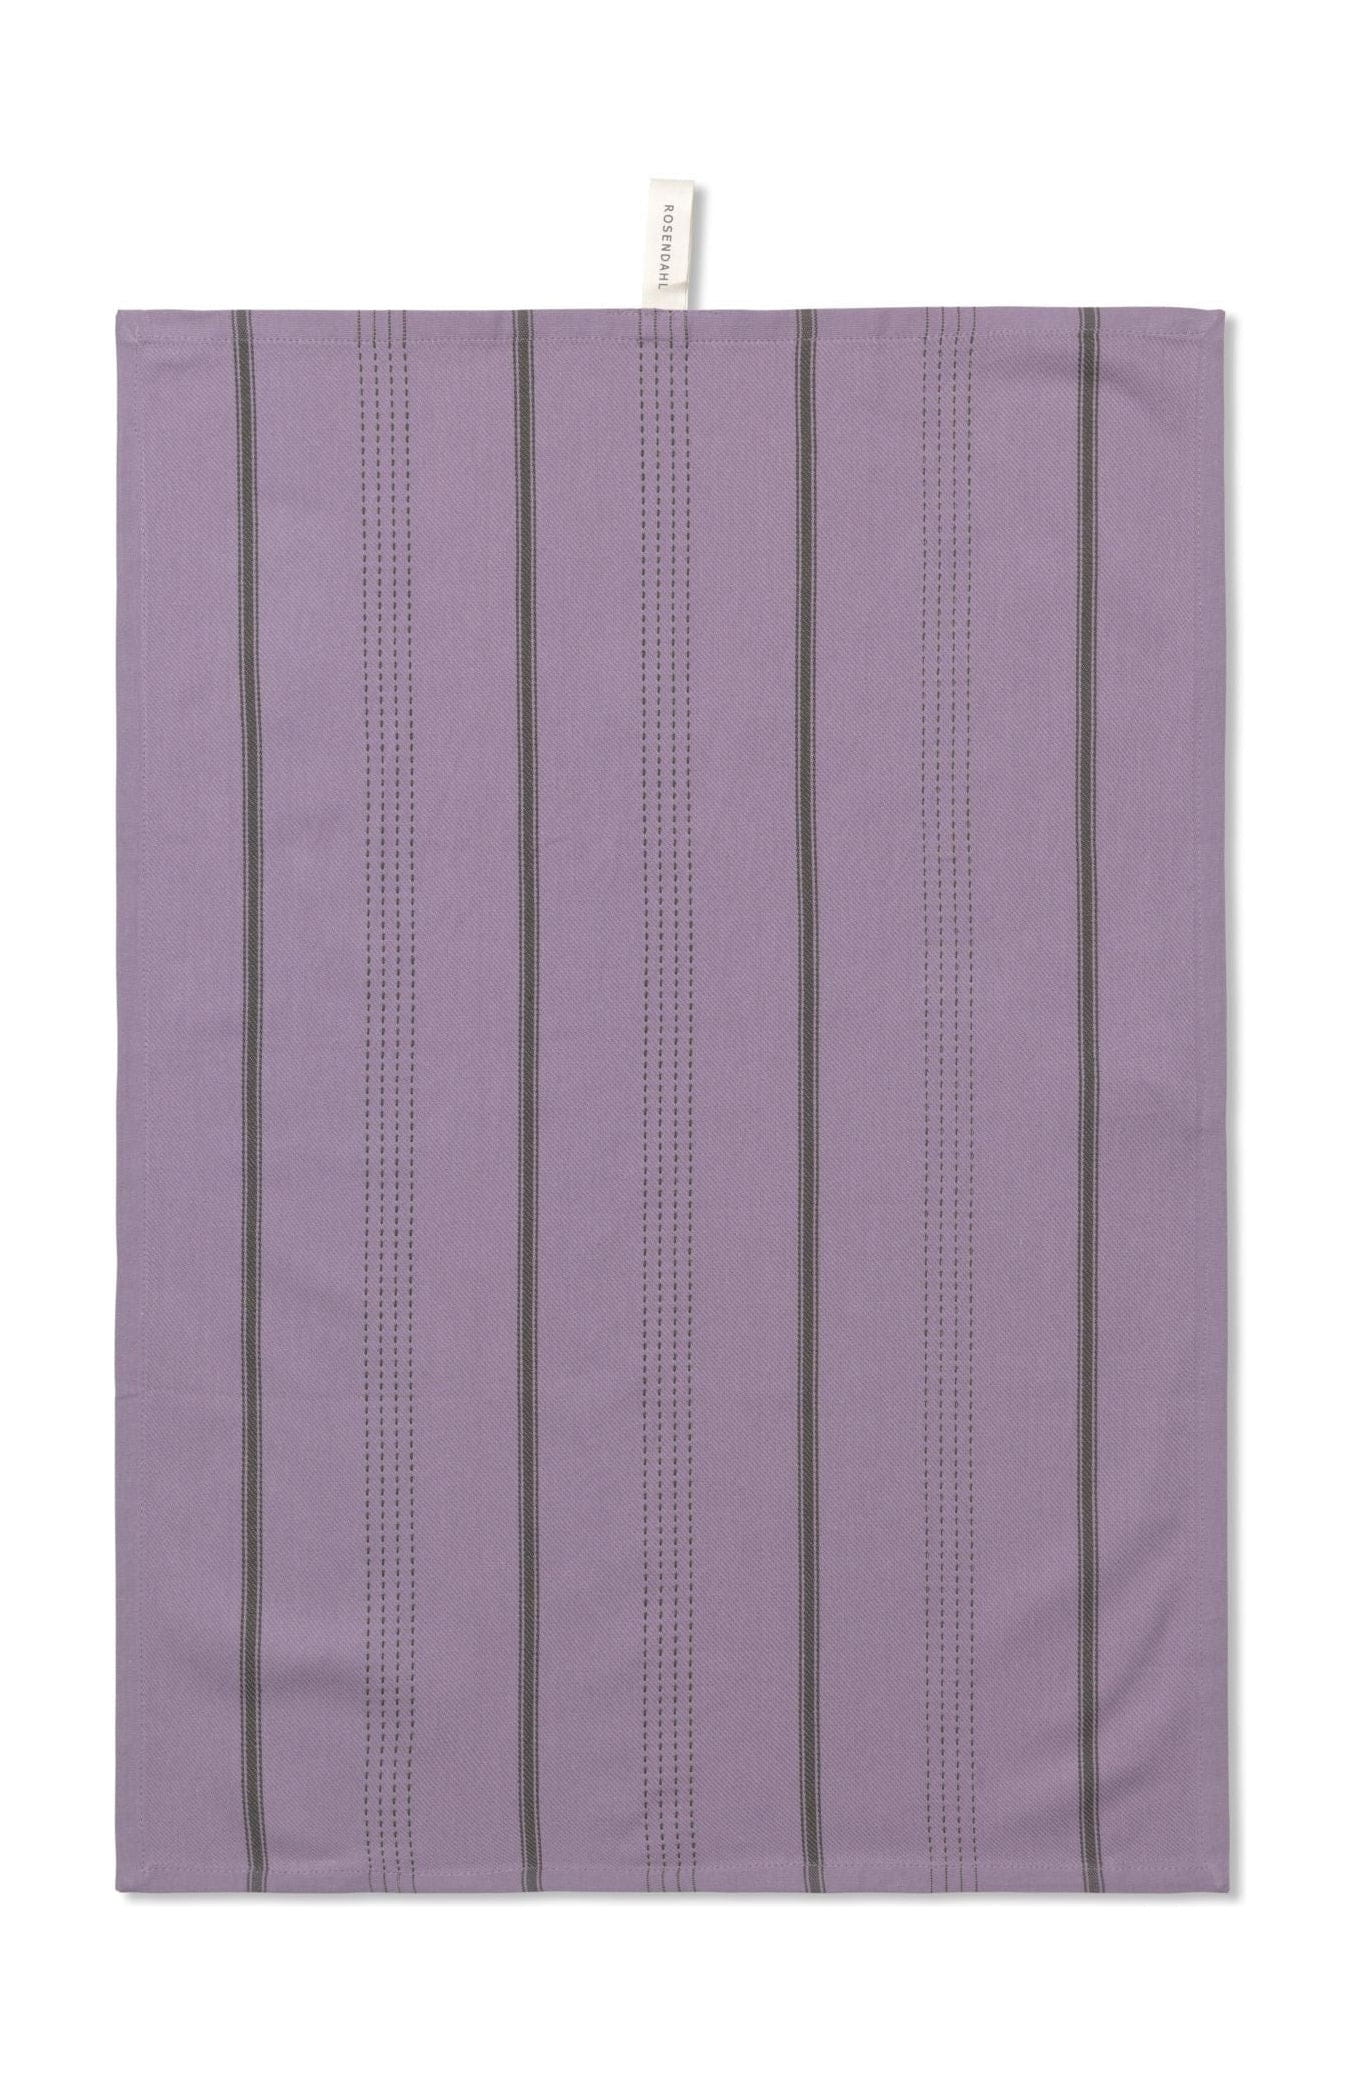 Rosendahl Rosendahl Textiles Beta To taquel 50x70 cm, púrpura